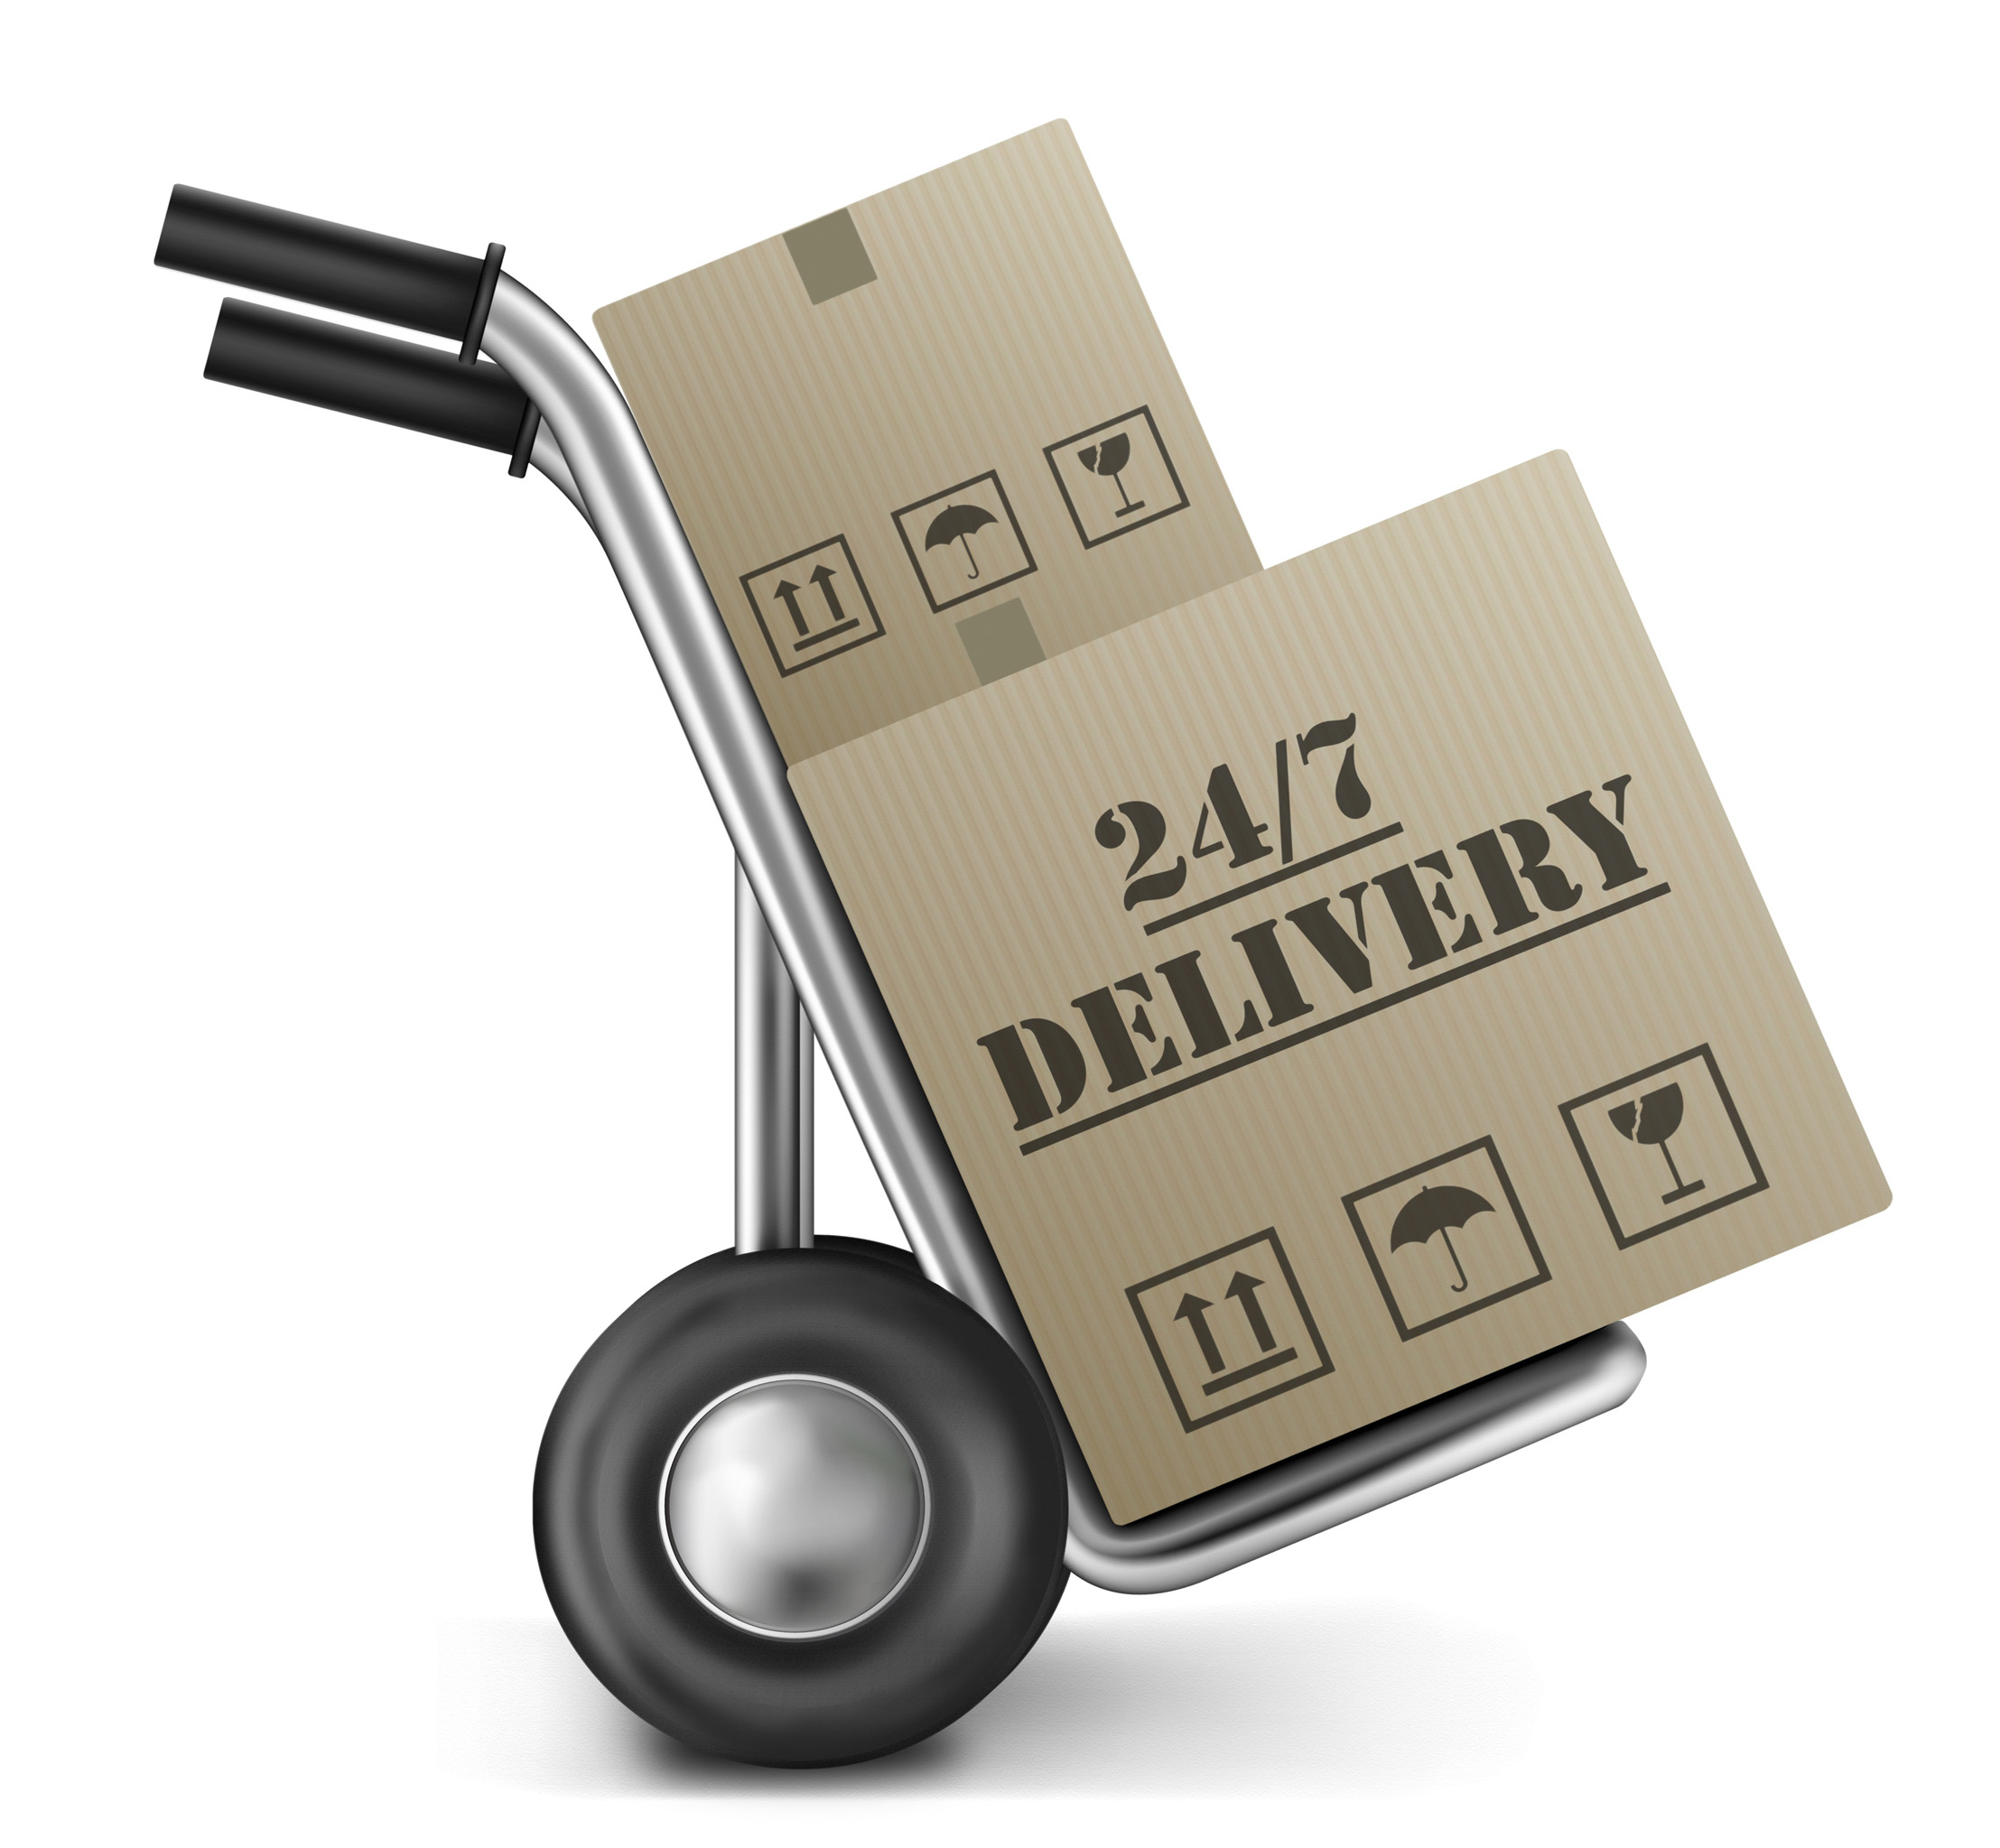 Boxshop Delivery   Free Images At Clker Com   Vector Clip Art Online